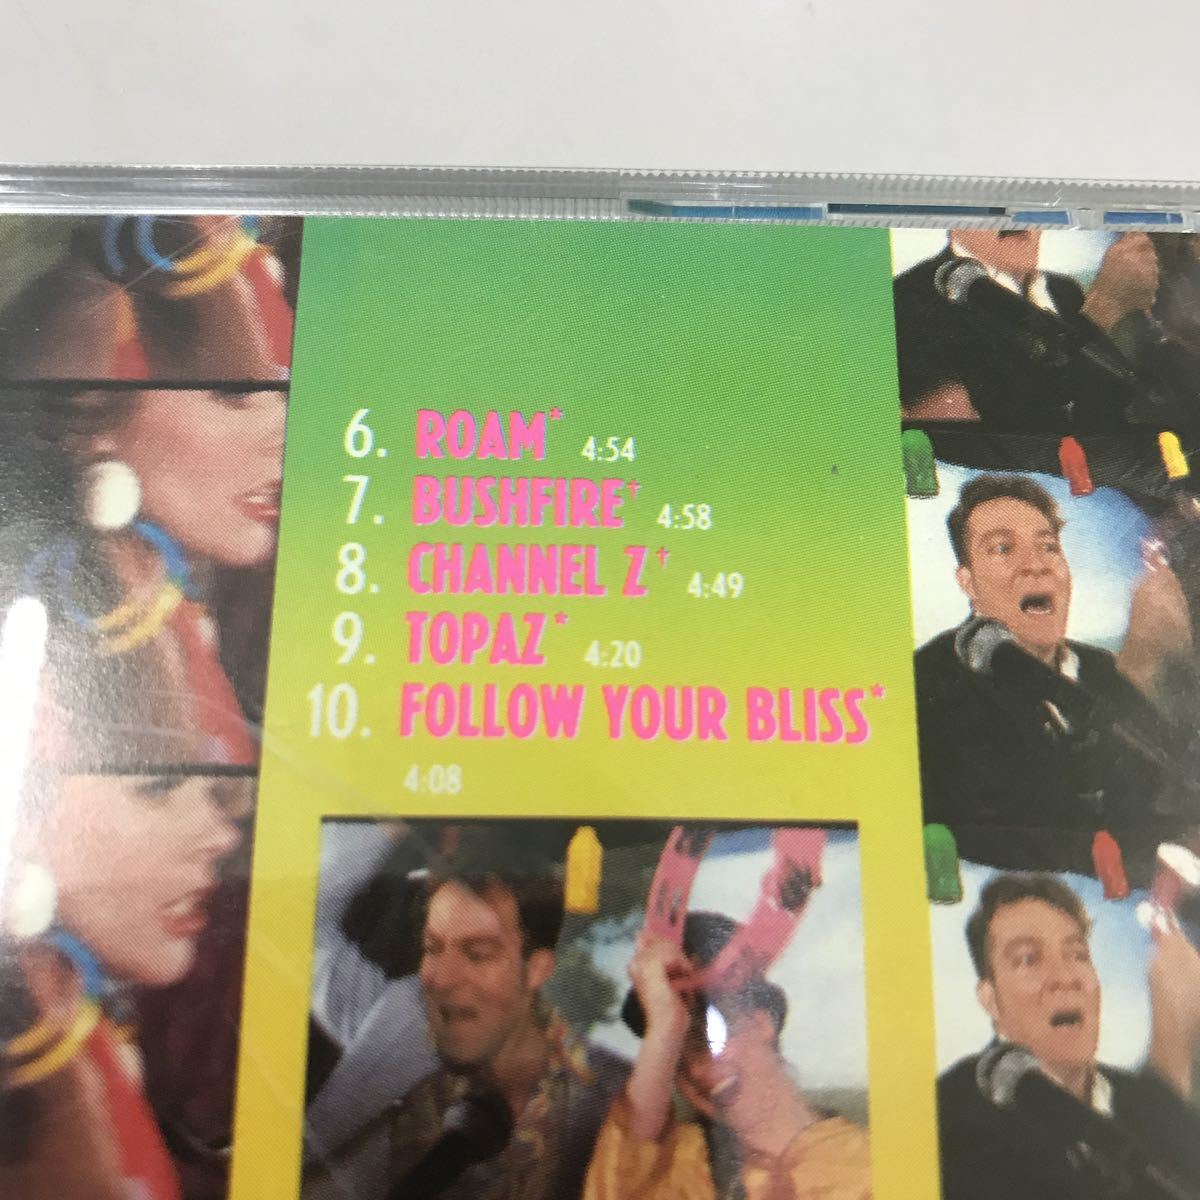 CD 輸入盤 中古【洋楽】長期保存品 ＴＨＥＢ 52s